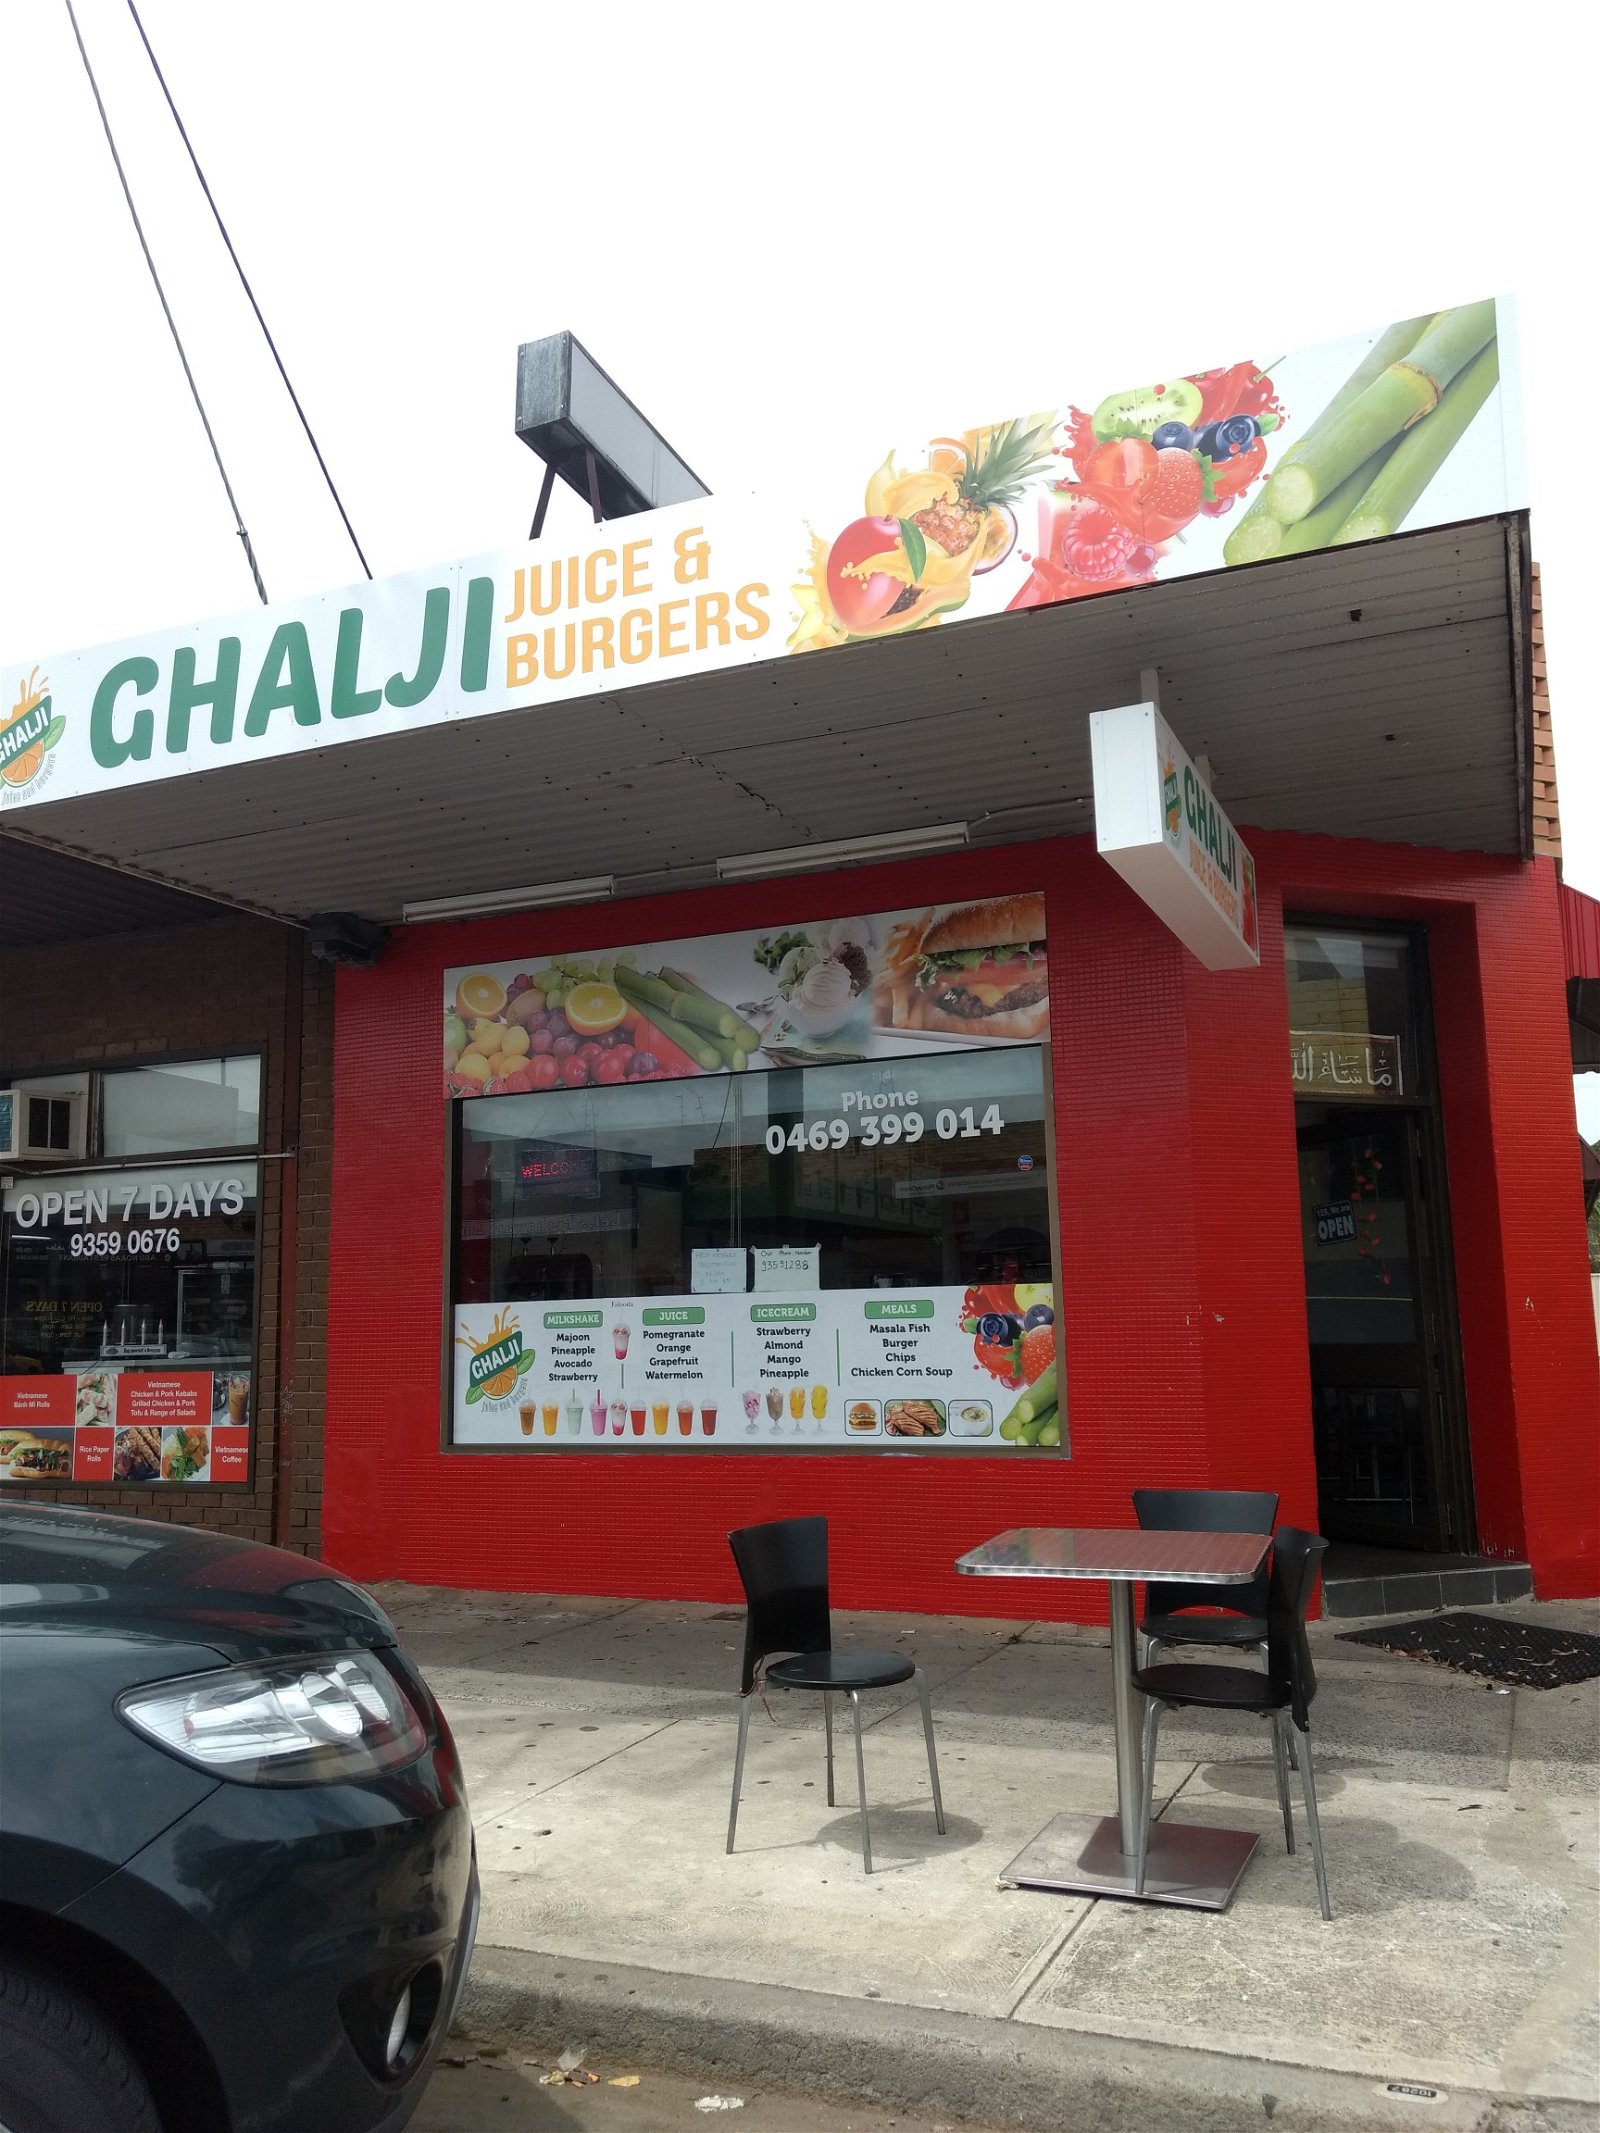 Ghalji Juice  Burgers - Pubs Sydney